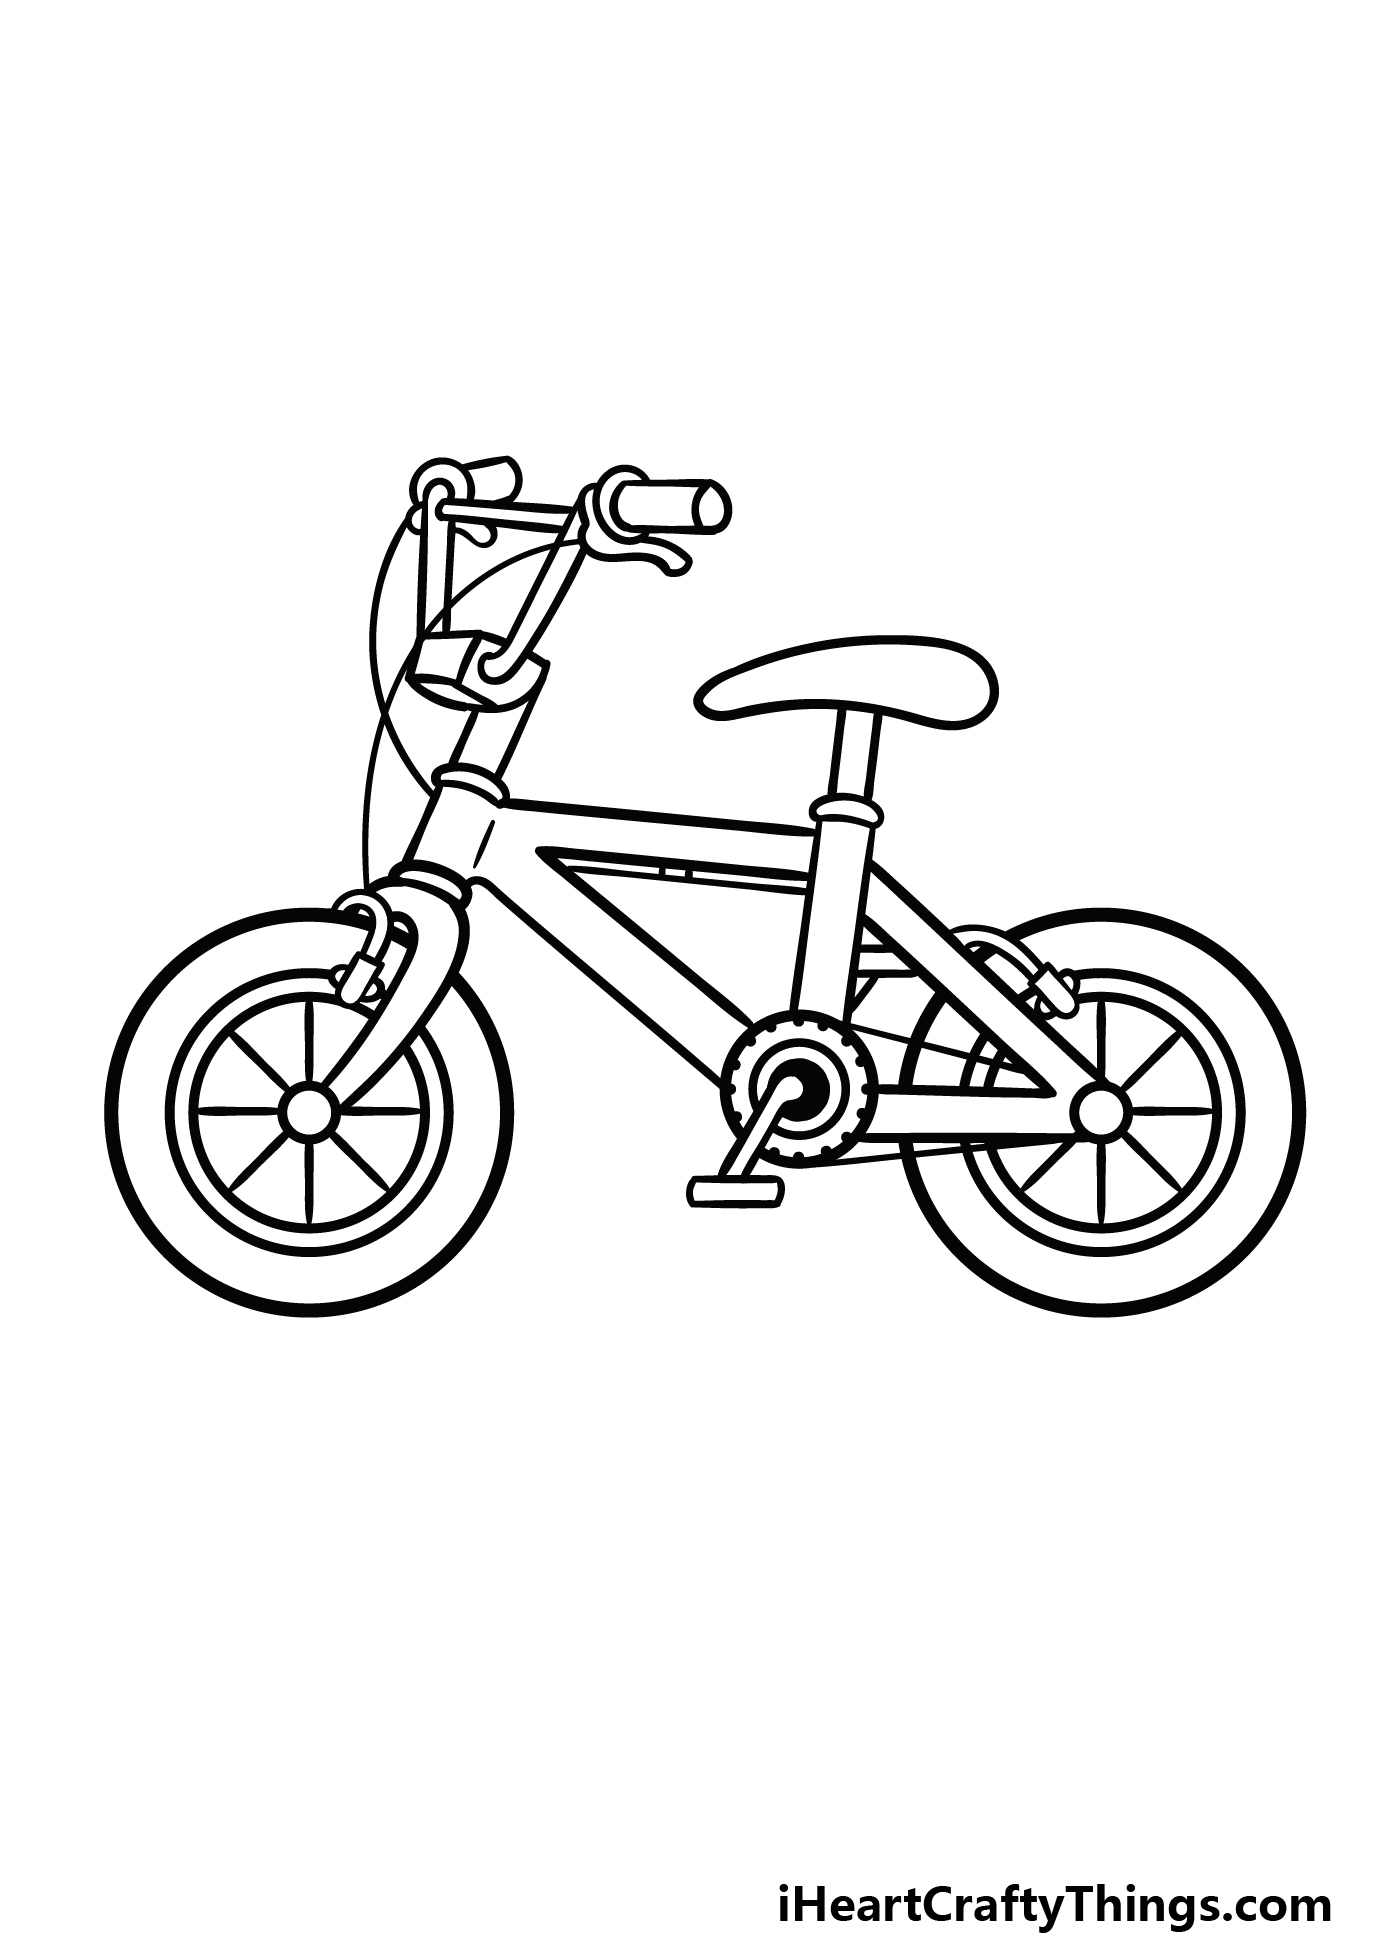 how to draw a cartoon bike step 6